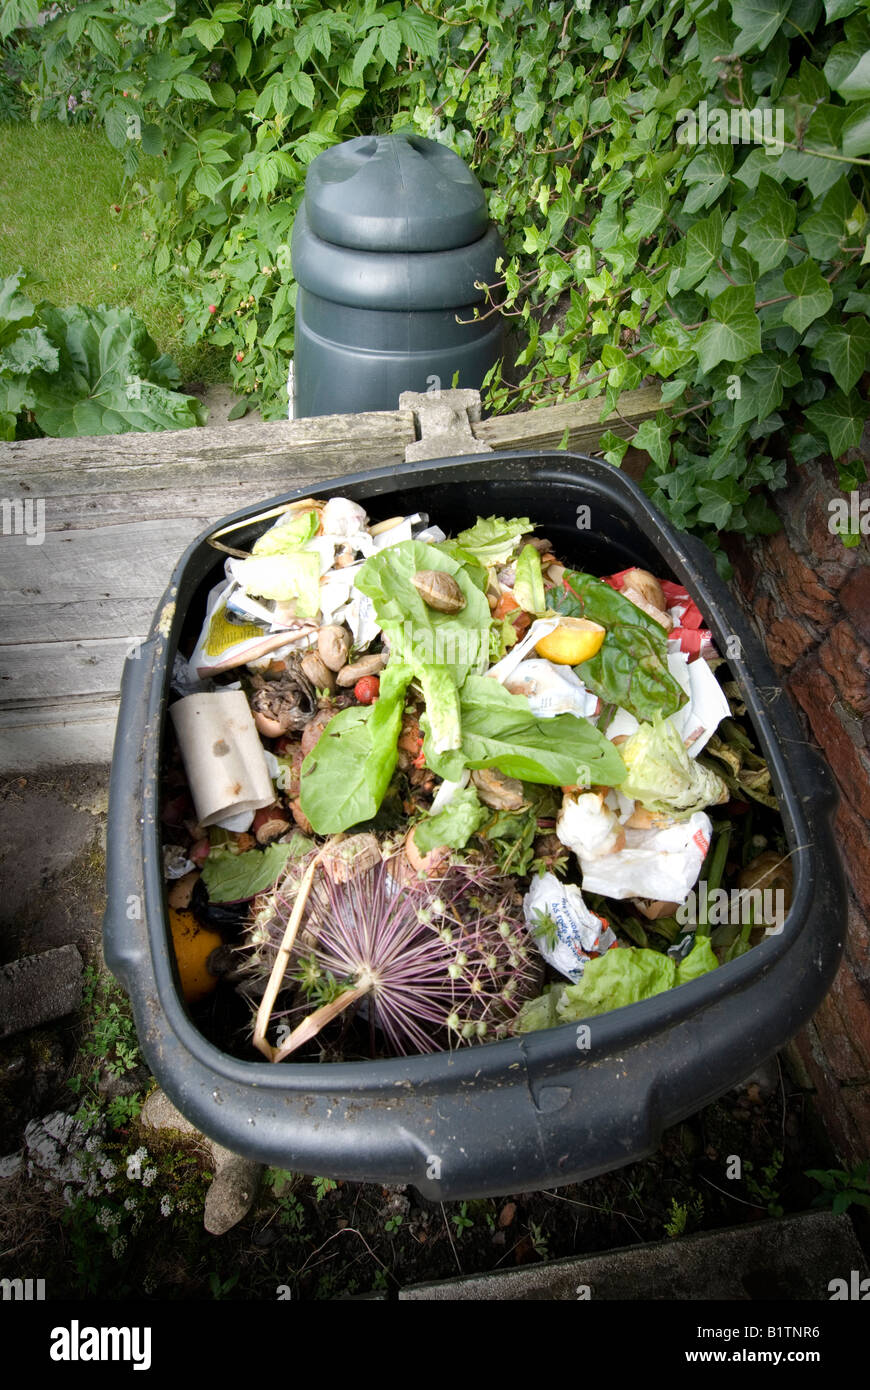 Large backyard wooden garden waste composting bin Stock Photo - Alamy